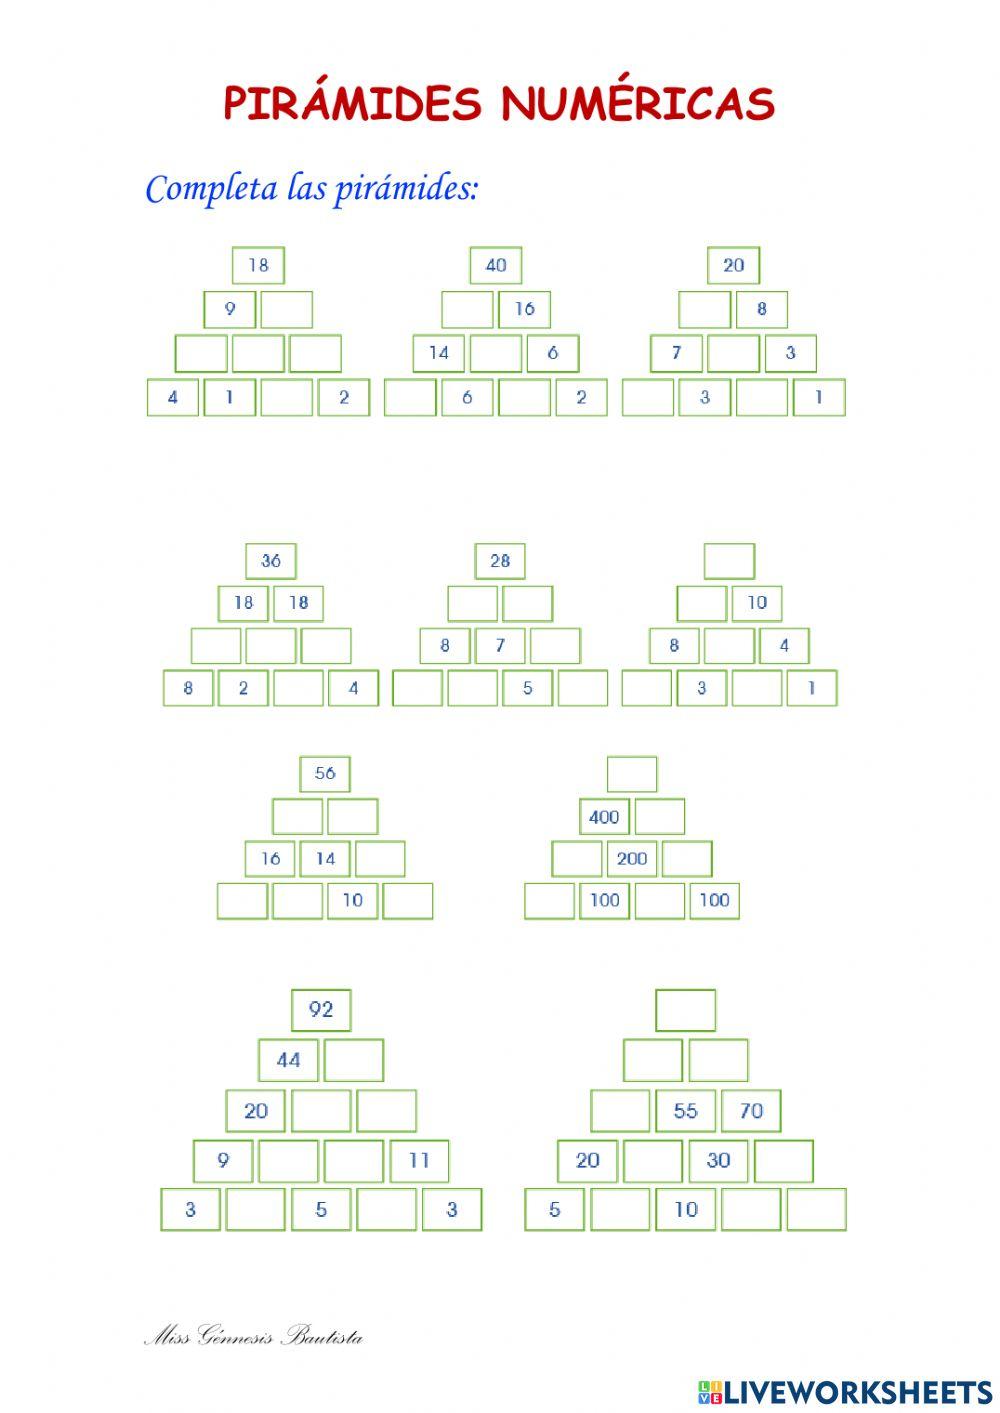 Ficha aplicativa de pirámides numéricas